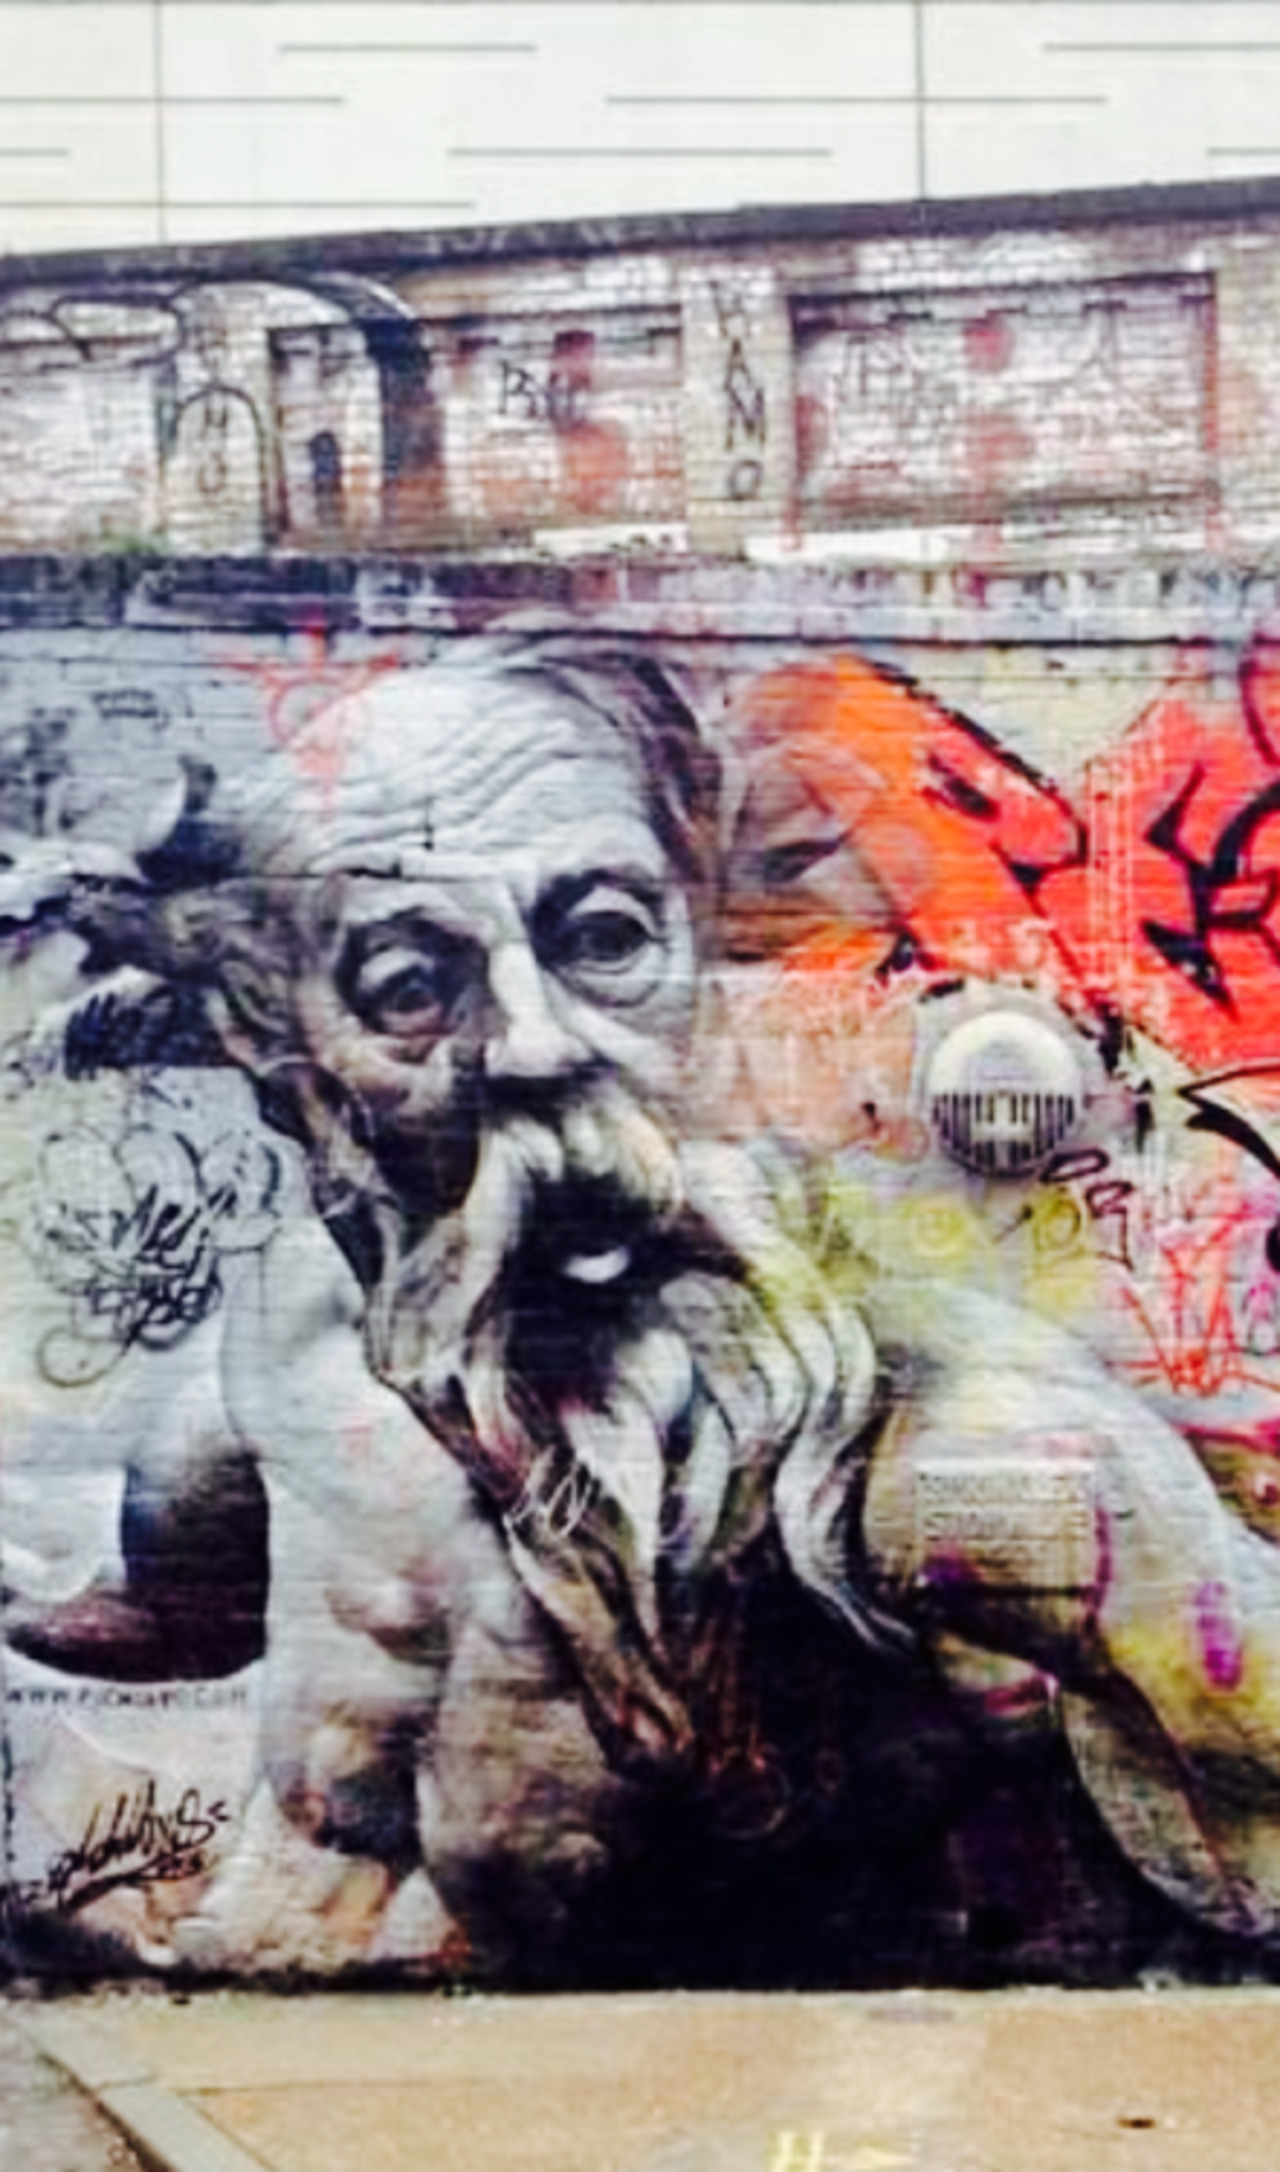 RT @Zang_Media: Photo - #Graffiti #Mural #Murales #StreetArt - #ZangArt #Showcase - http://bit.ly/1x5WL8w http://t.co/ZAcfgrYqsy